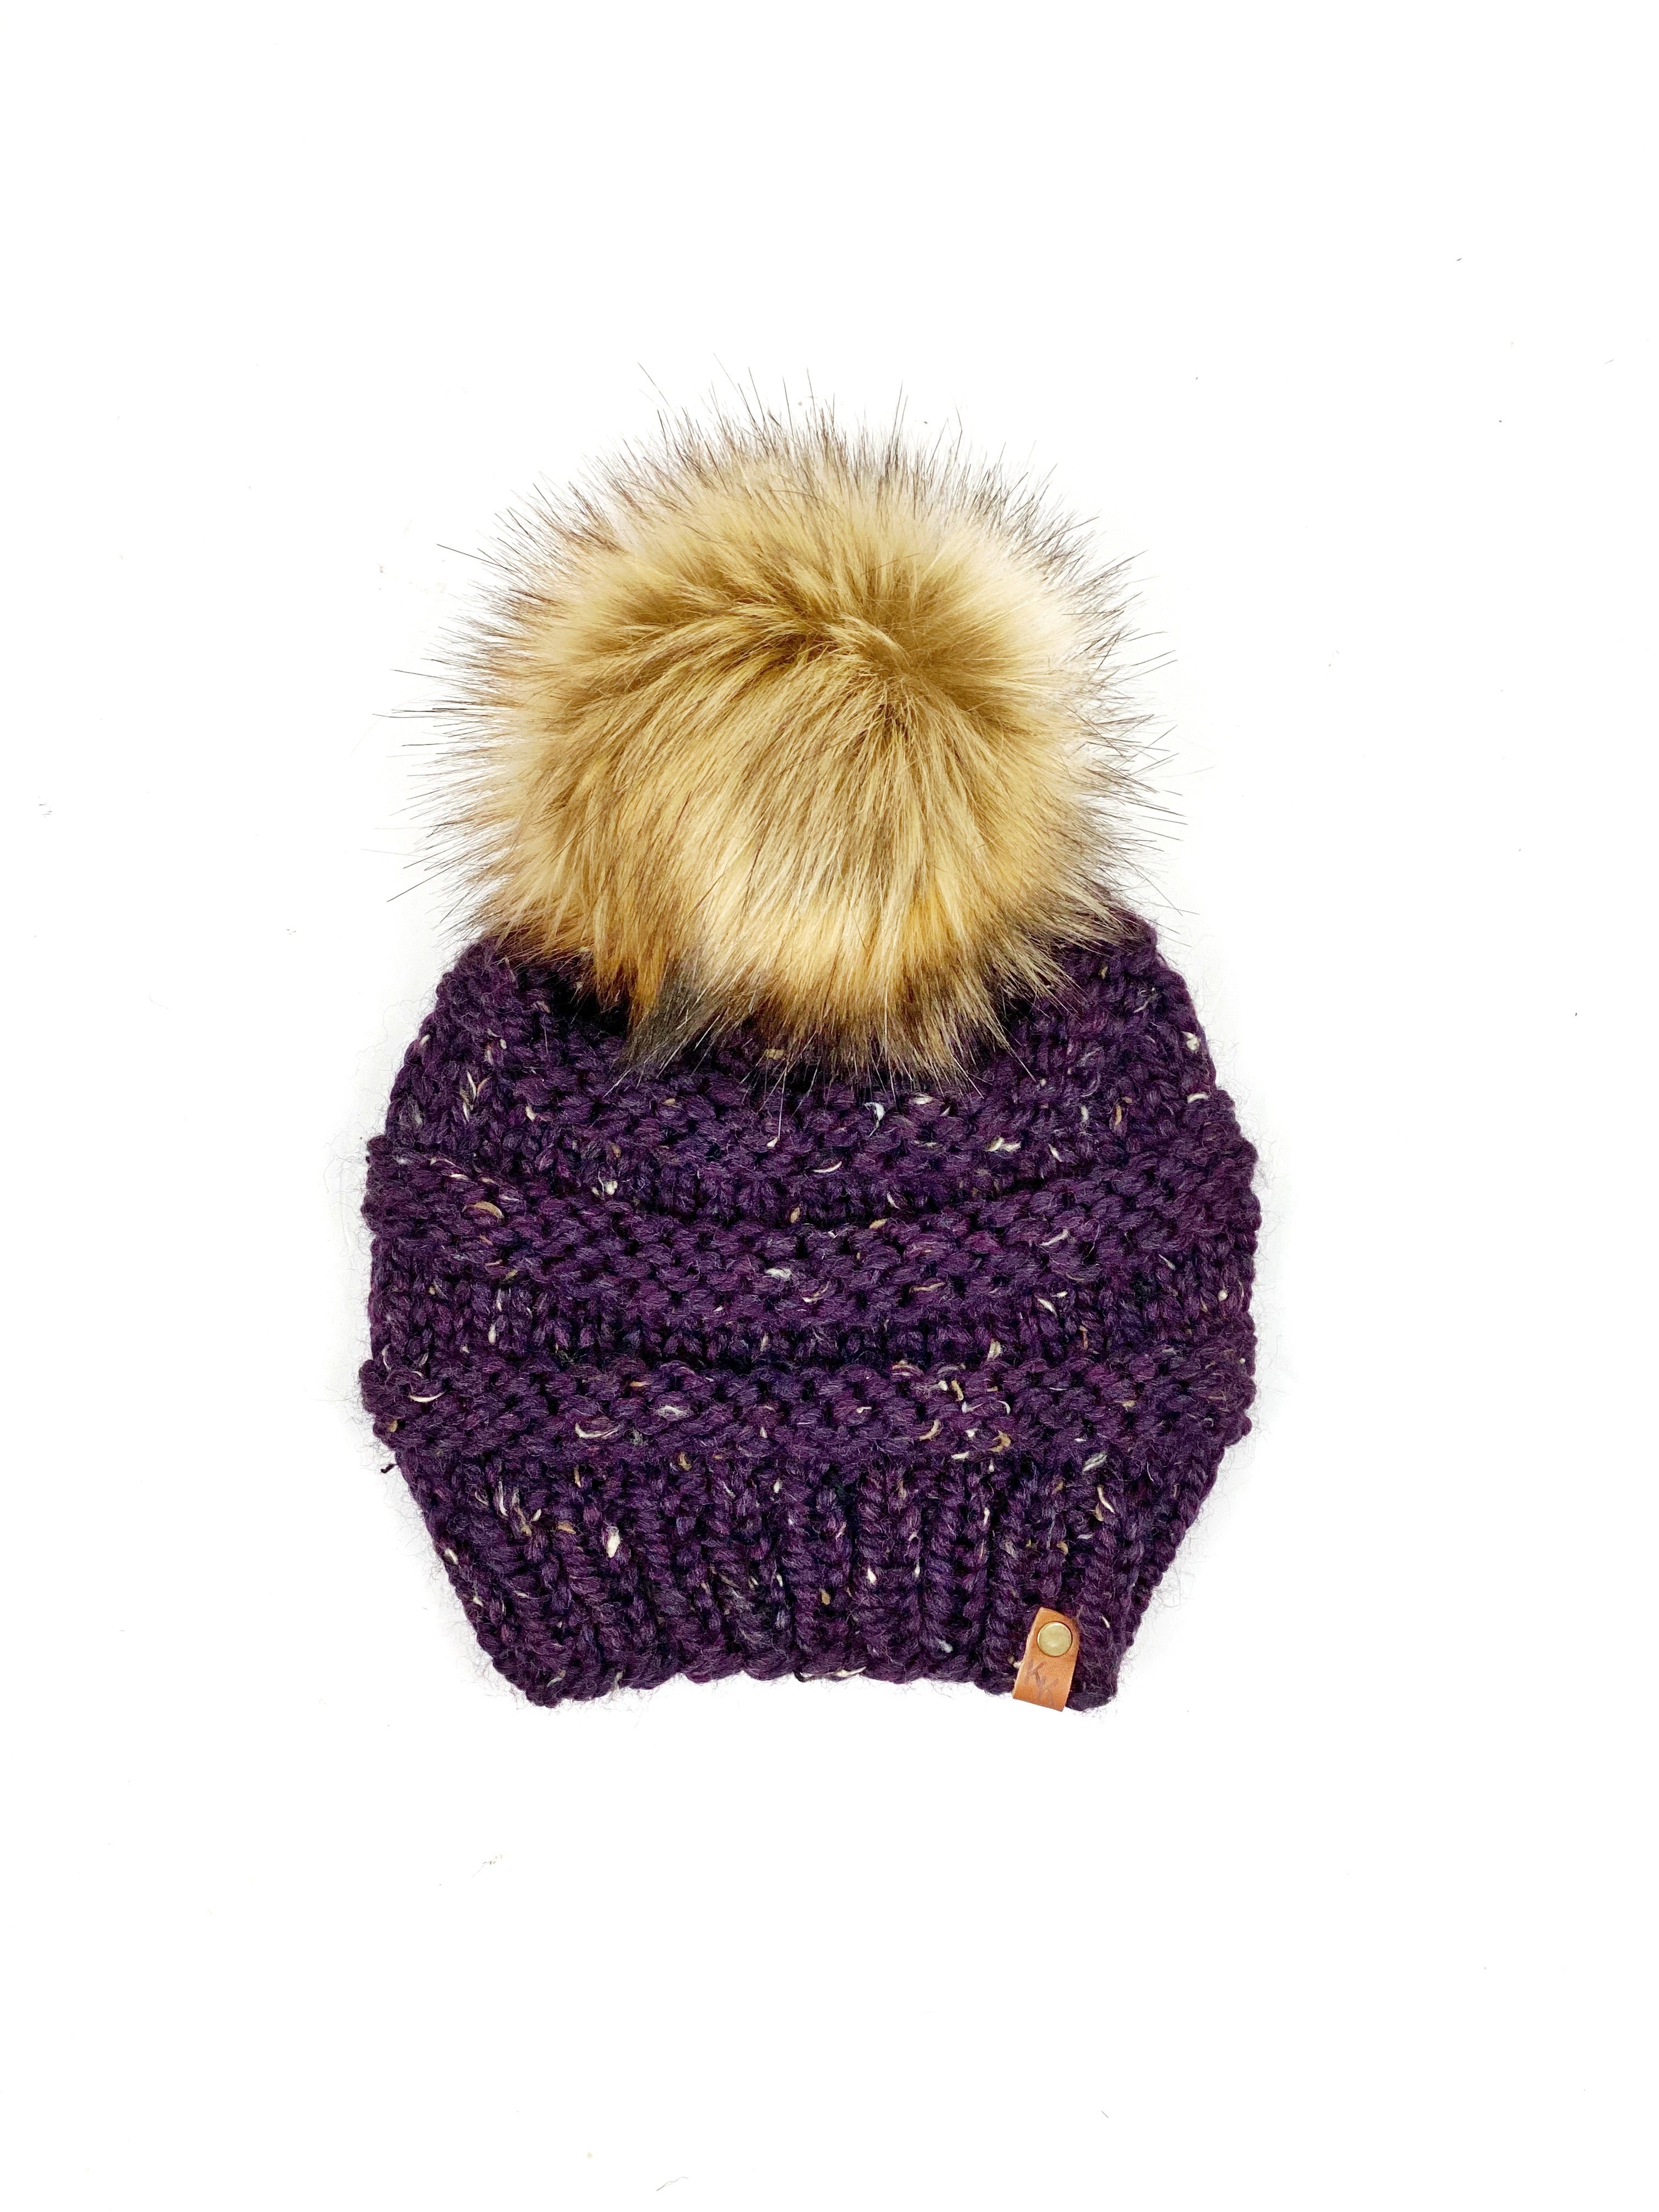 Freddie Beanie, Womens Knit Hat, Copy Cat Beanie, Wool Blend Toasted Marshmallow Faux Fur Pom